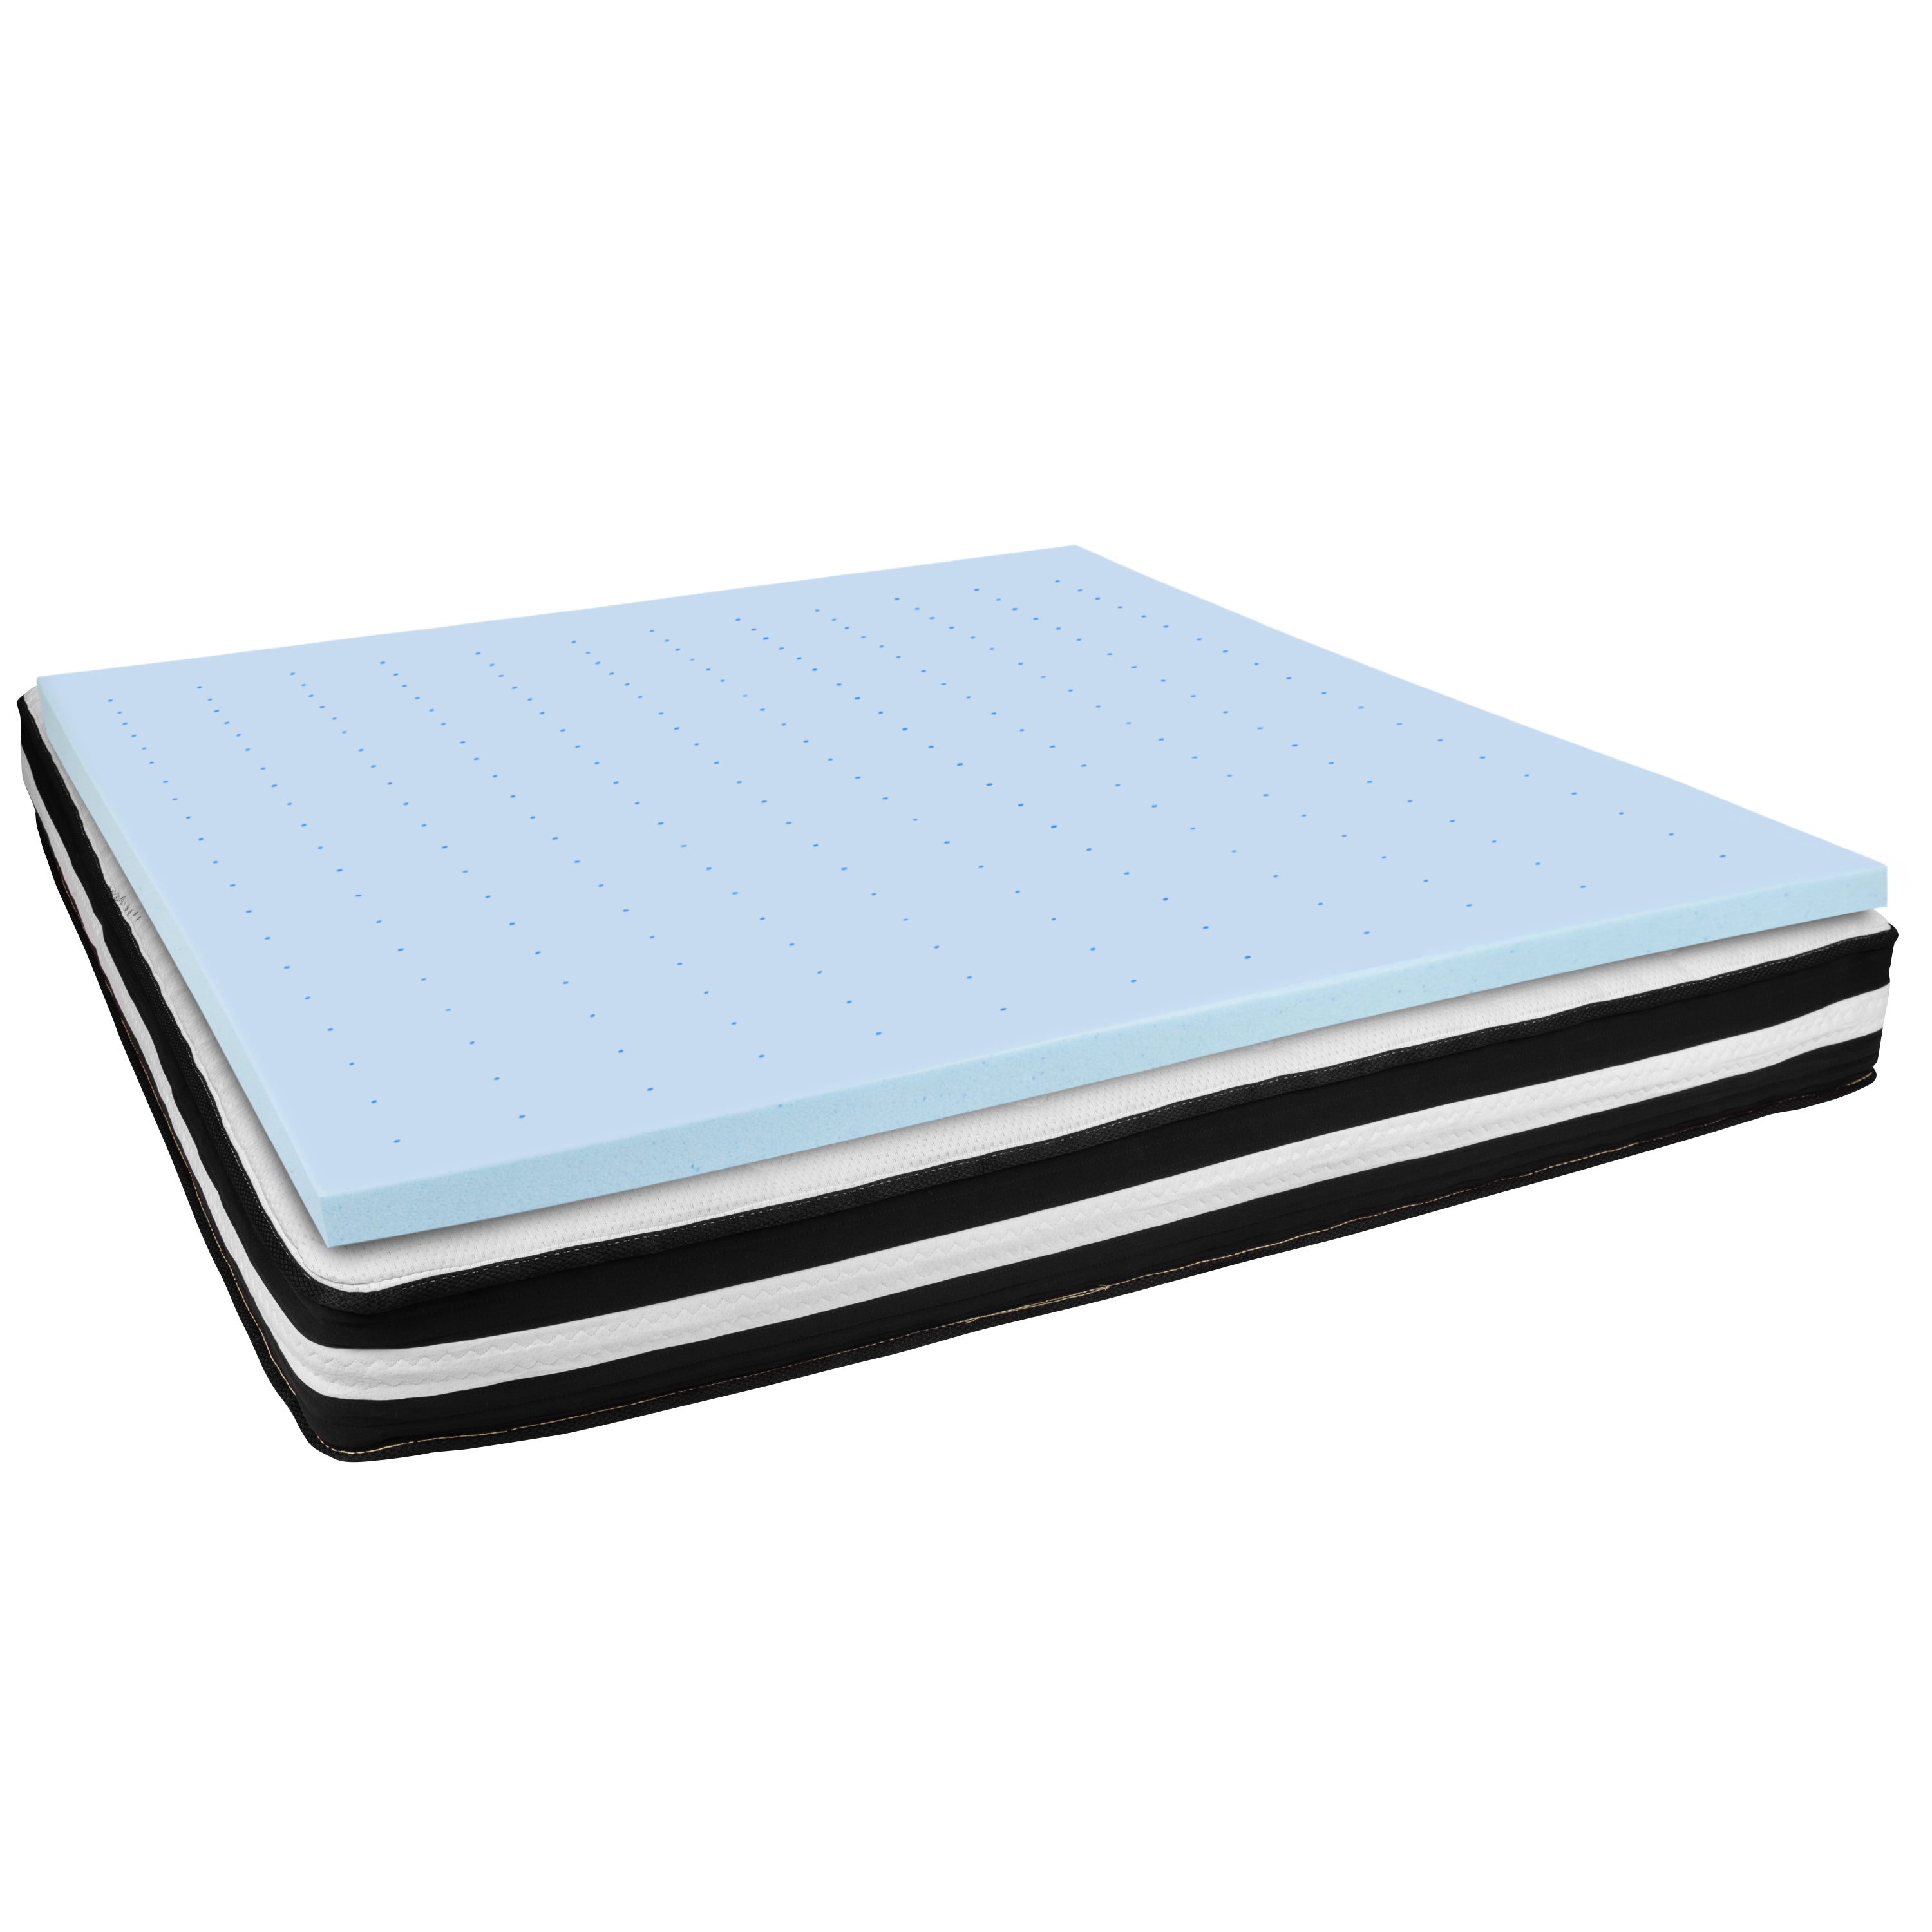 Capri Comfortable Sleep 10 Inch CertiPUR-US Certified Foam Pocket Spring Mattress & 2 inch Gel Memory Foam Topper Bundle-Mattress and Memory Foam Topper-Flash Furniture-Wall2Wall Furnishings